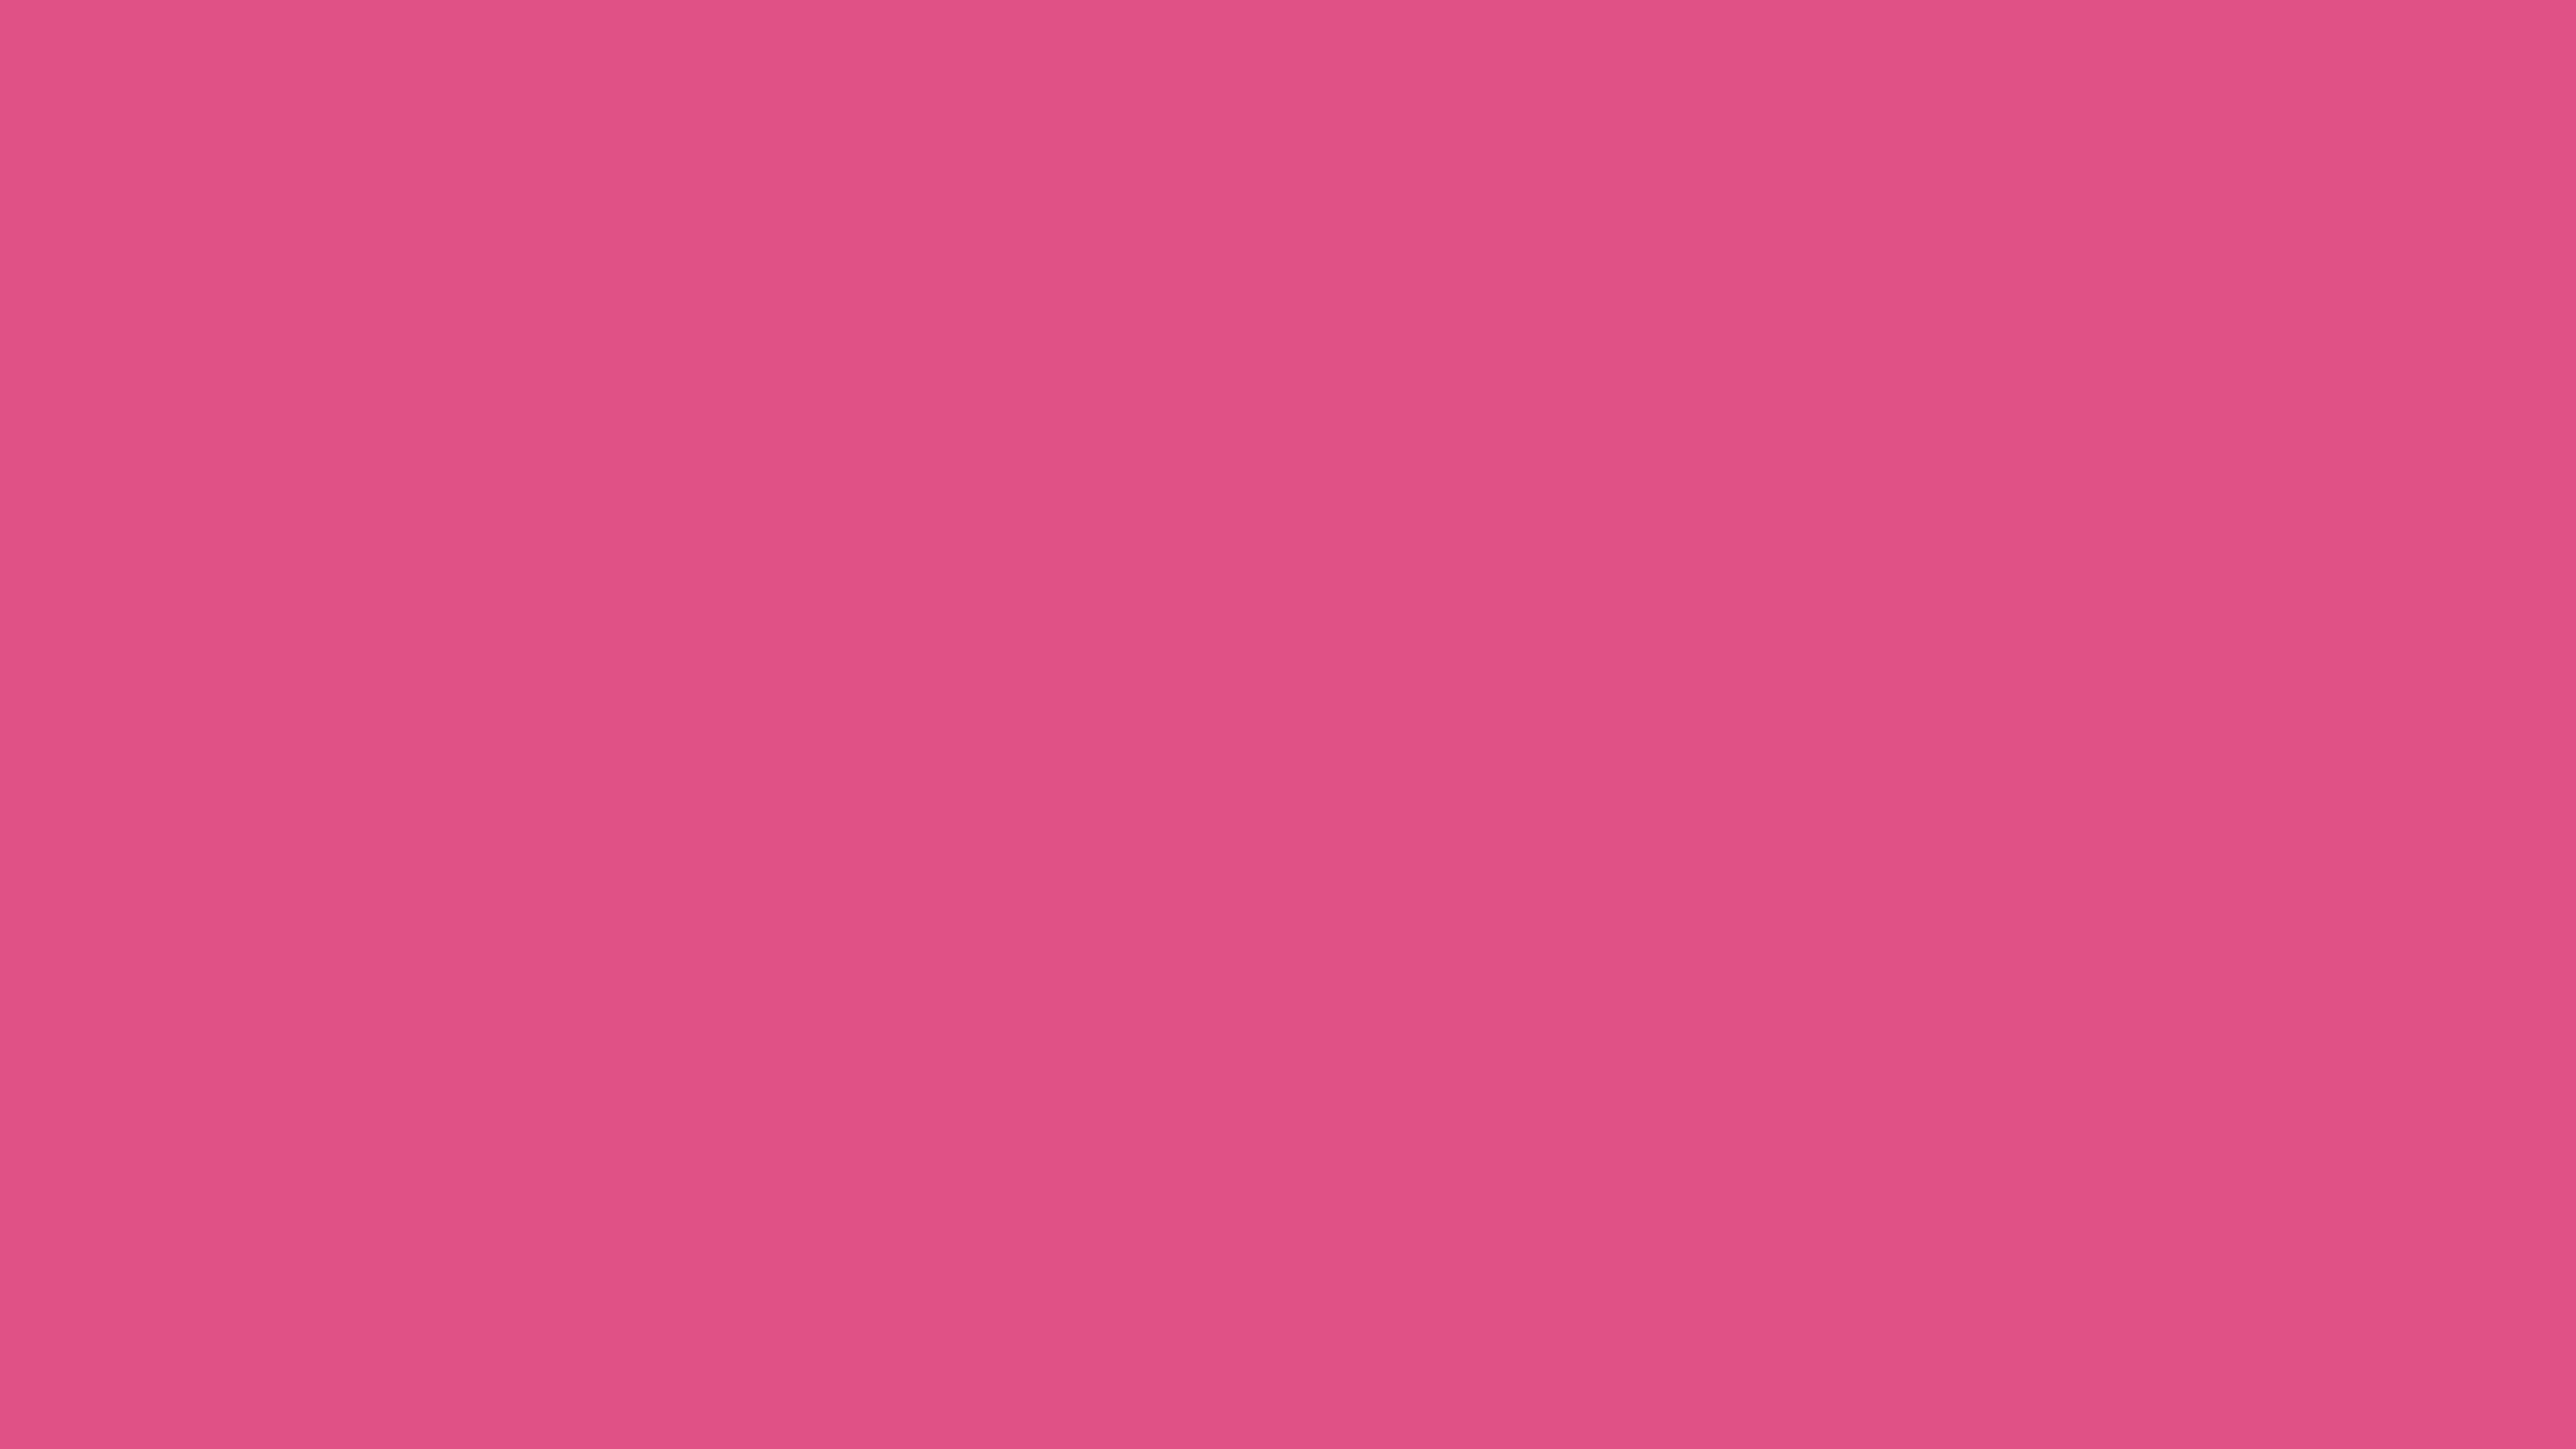 5120x2880 Fandango Pink Solid Color Background